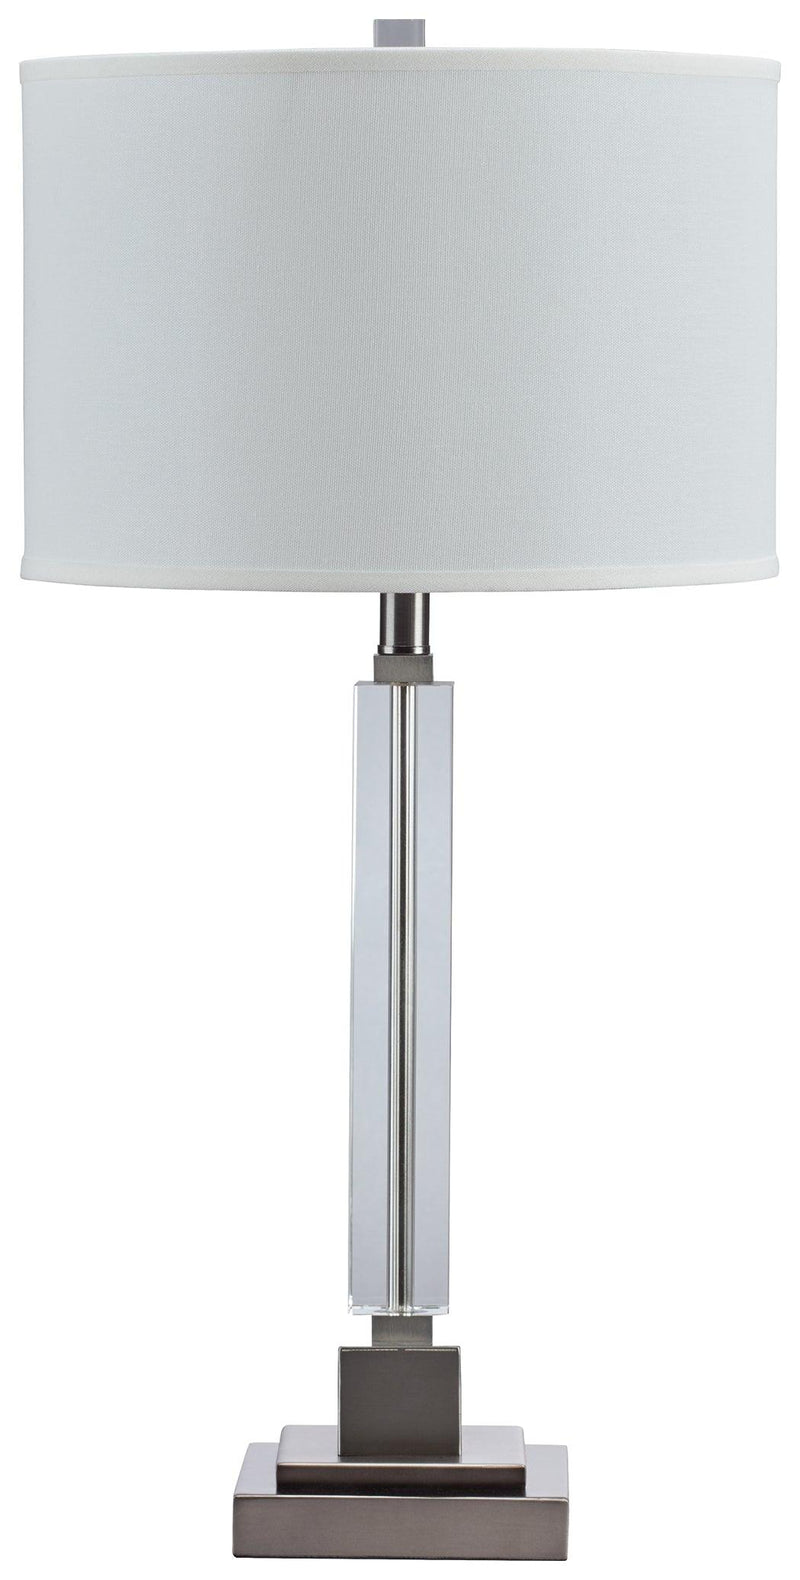 Deccalen Clear/silver Finish Table Lamp